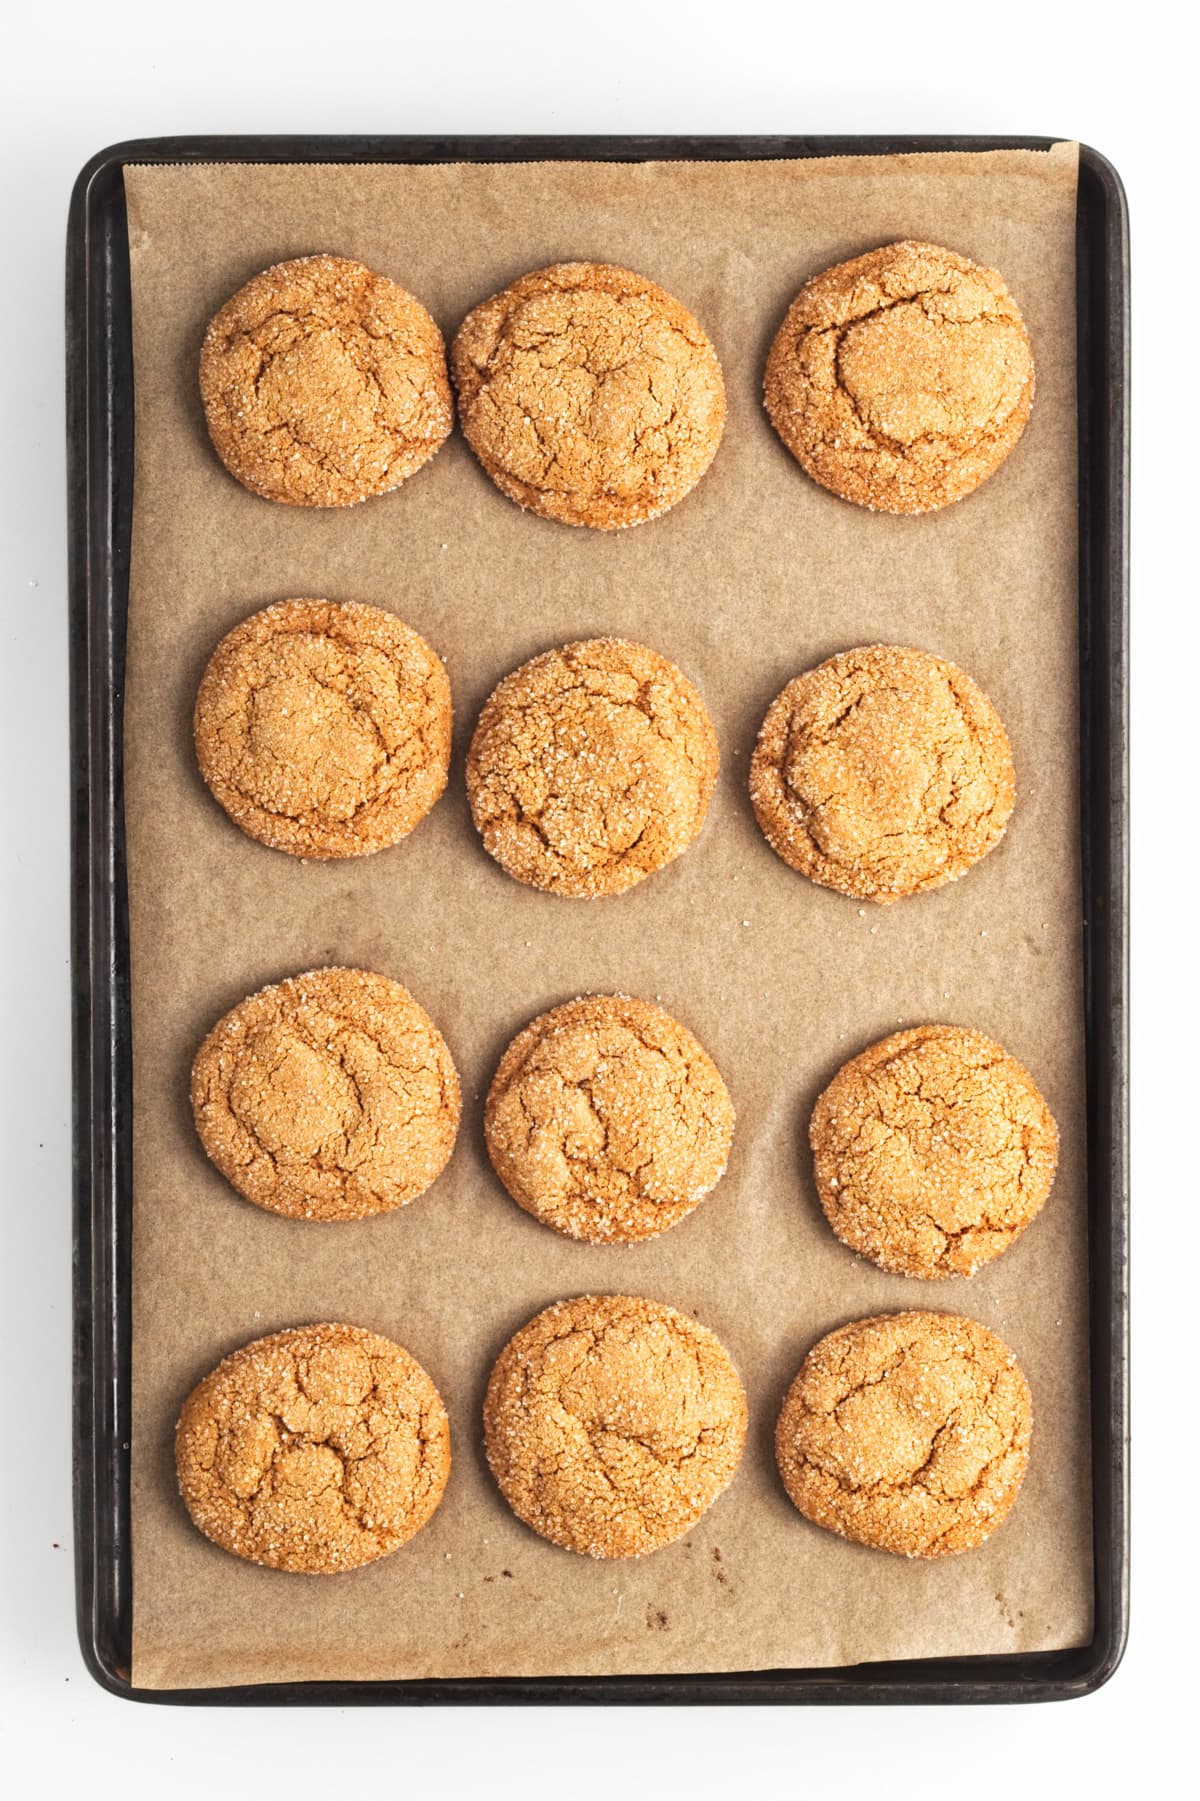 Twelve freshly baked ginger cookies on a lined baking sheet.